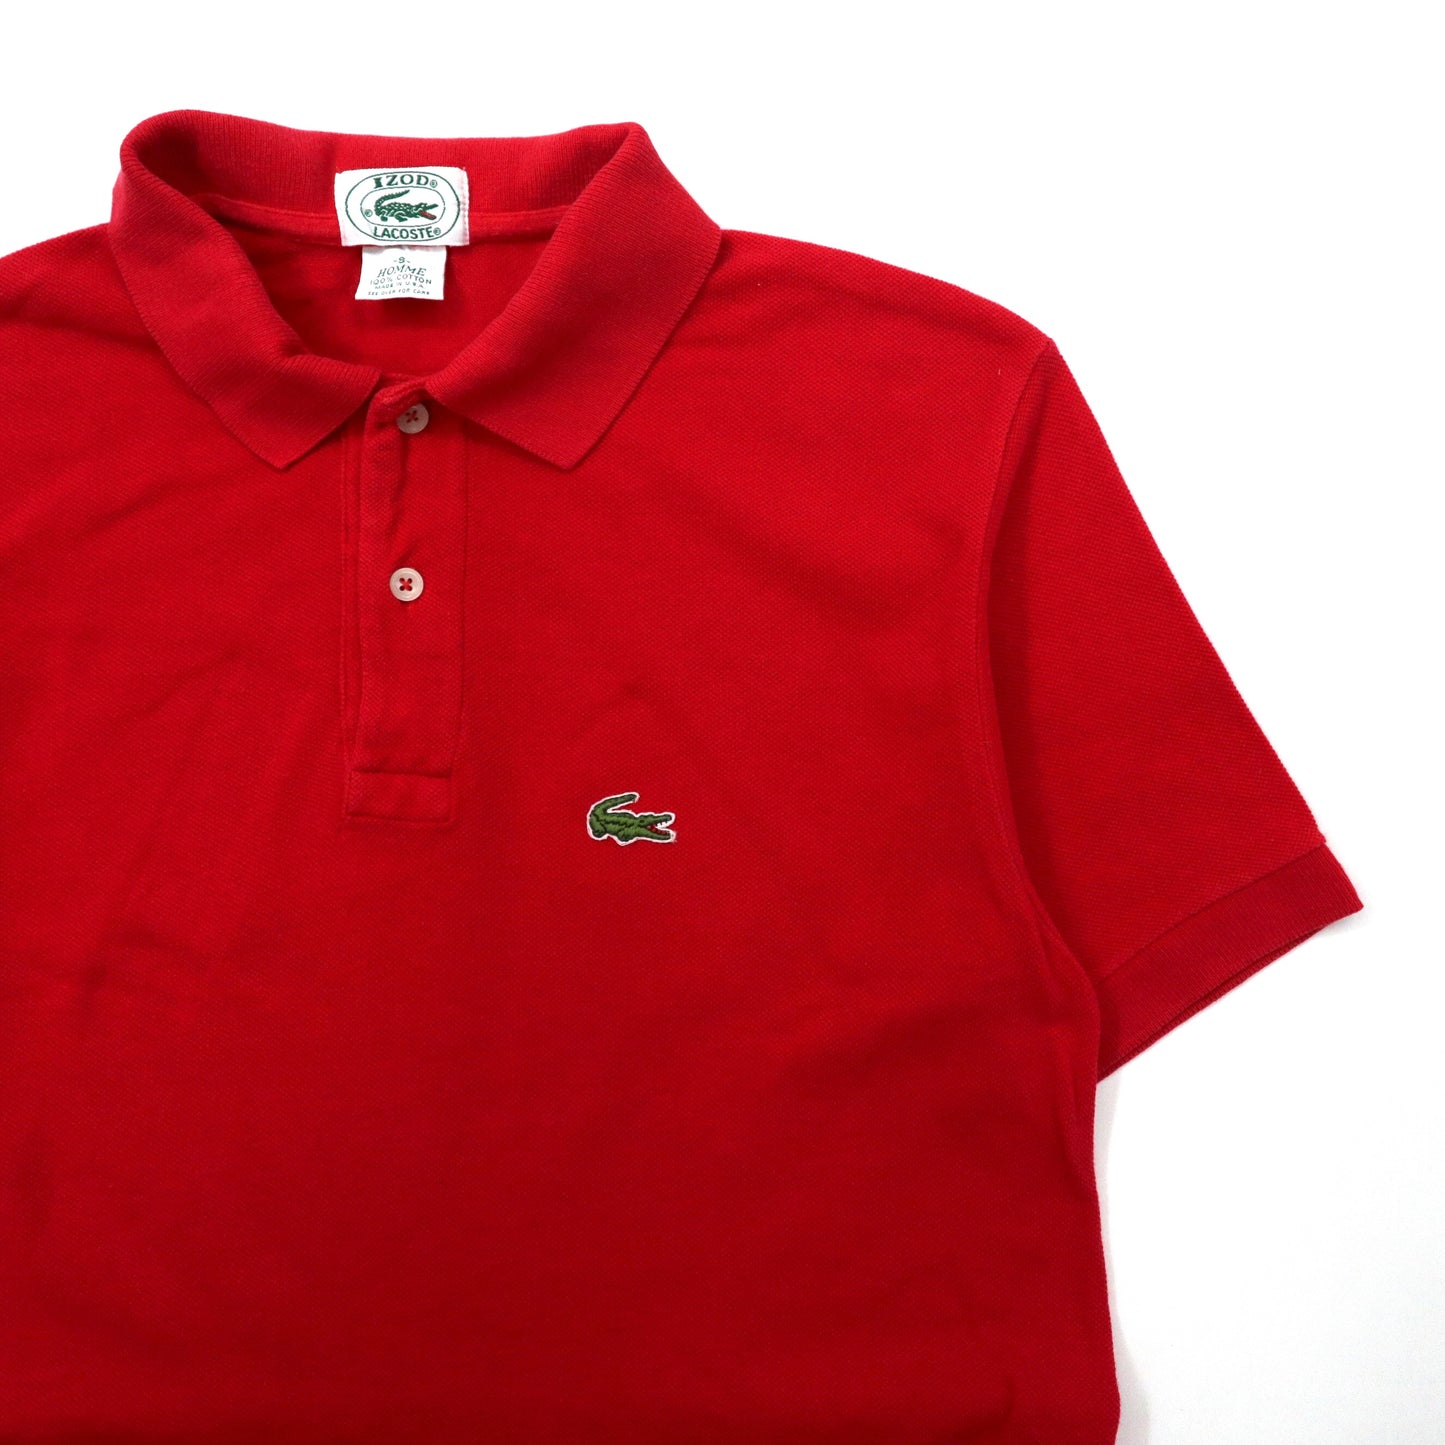 USA製 IZOD LACOSTE ポロシャツ S レッド コットン ワンポイントロゴ 80年代